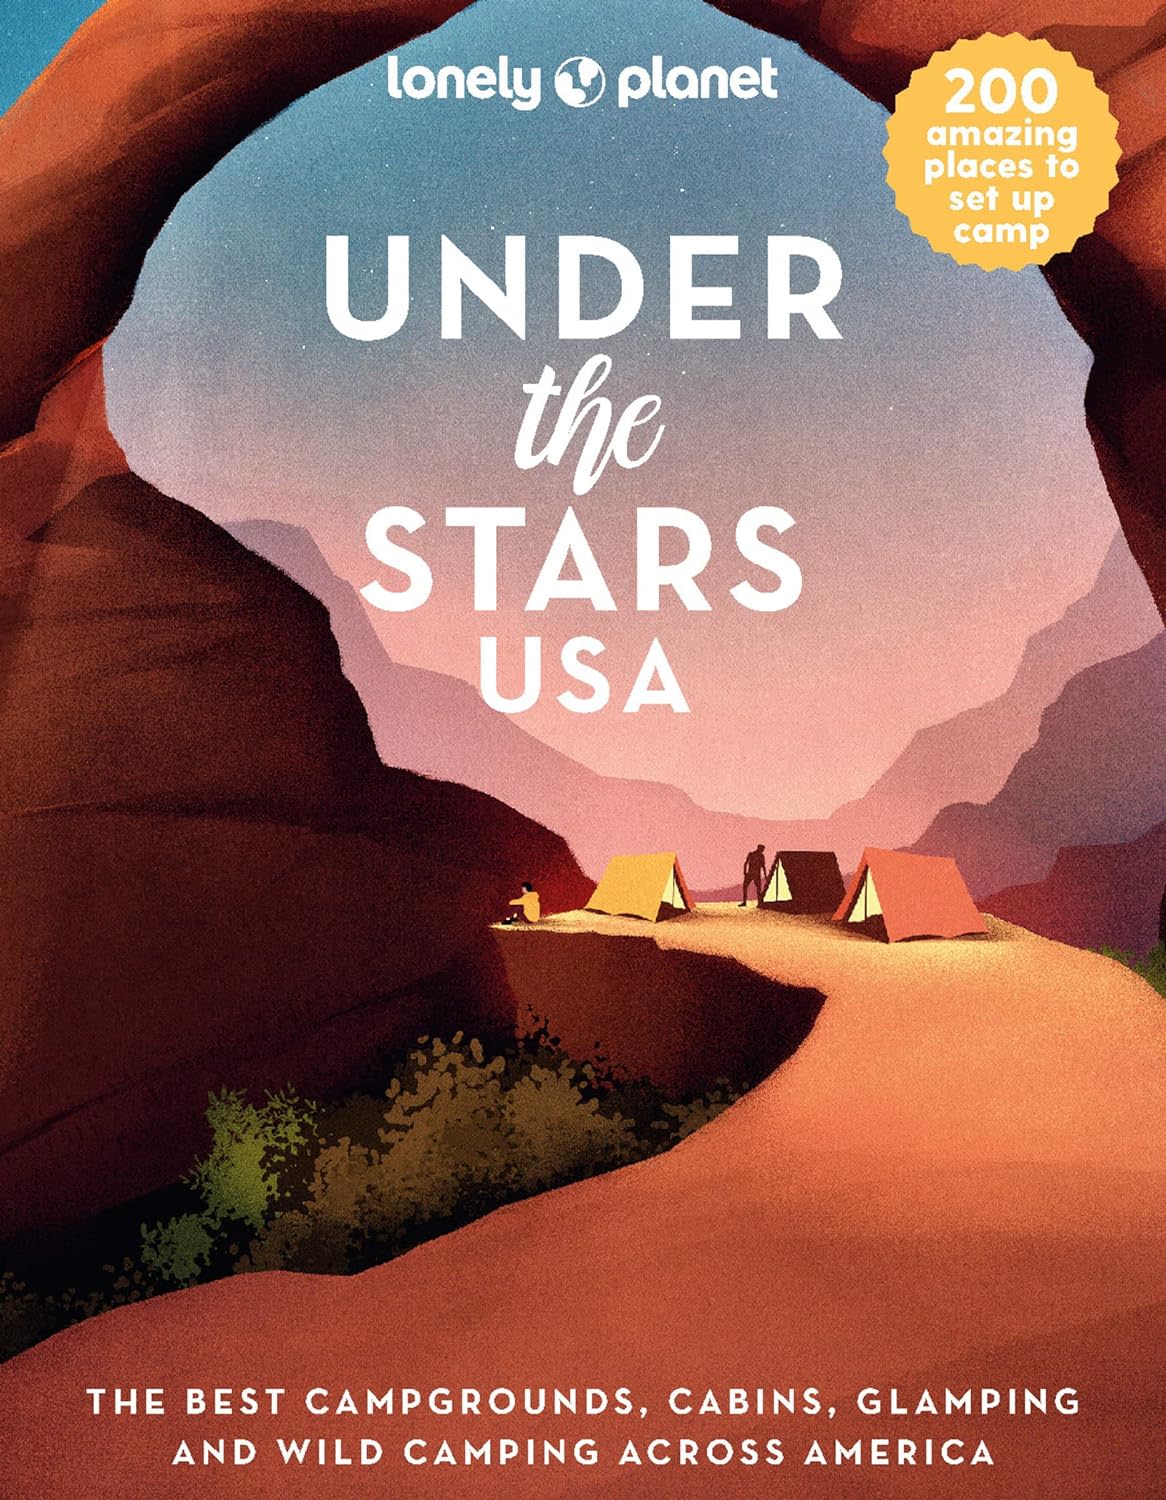 "Under the Stars USA"